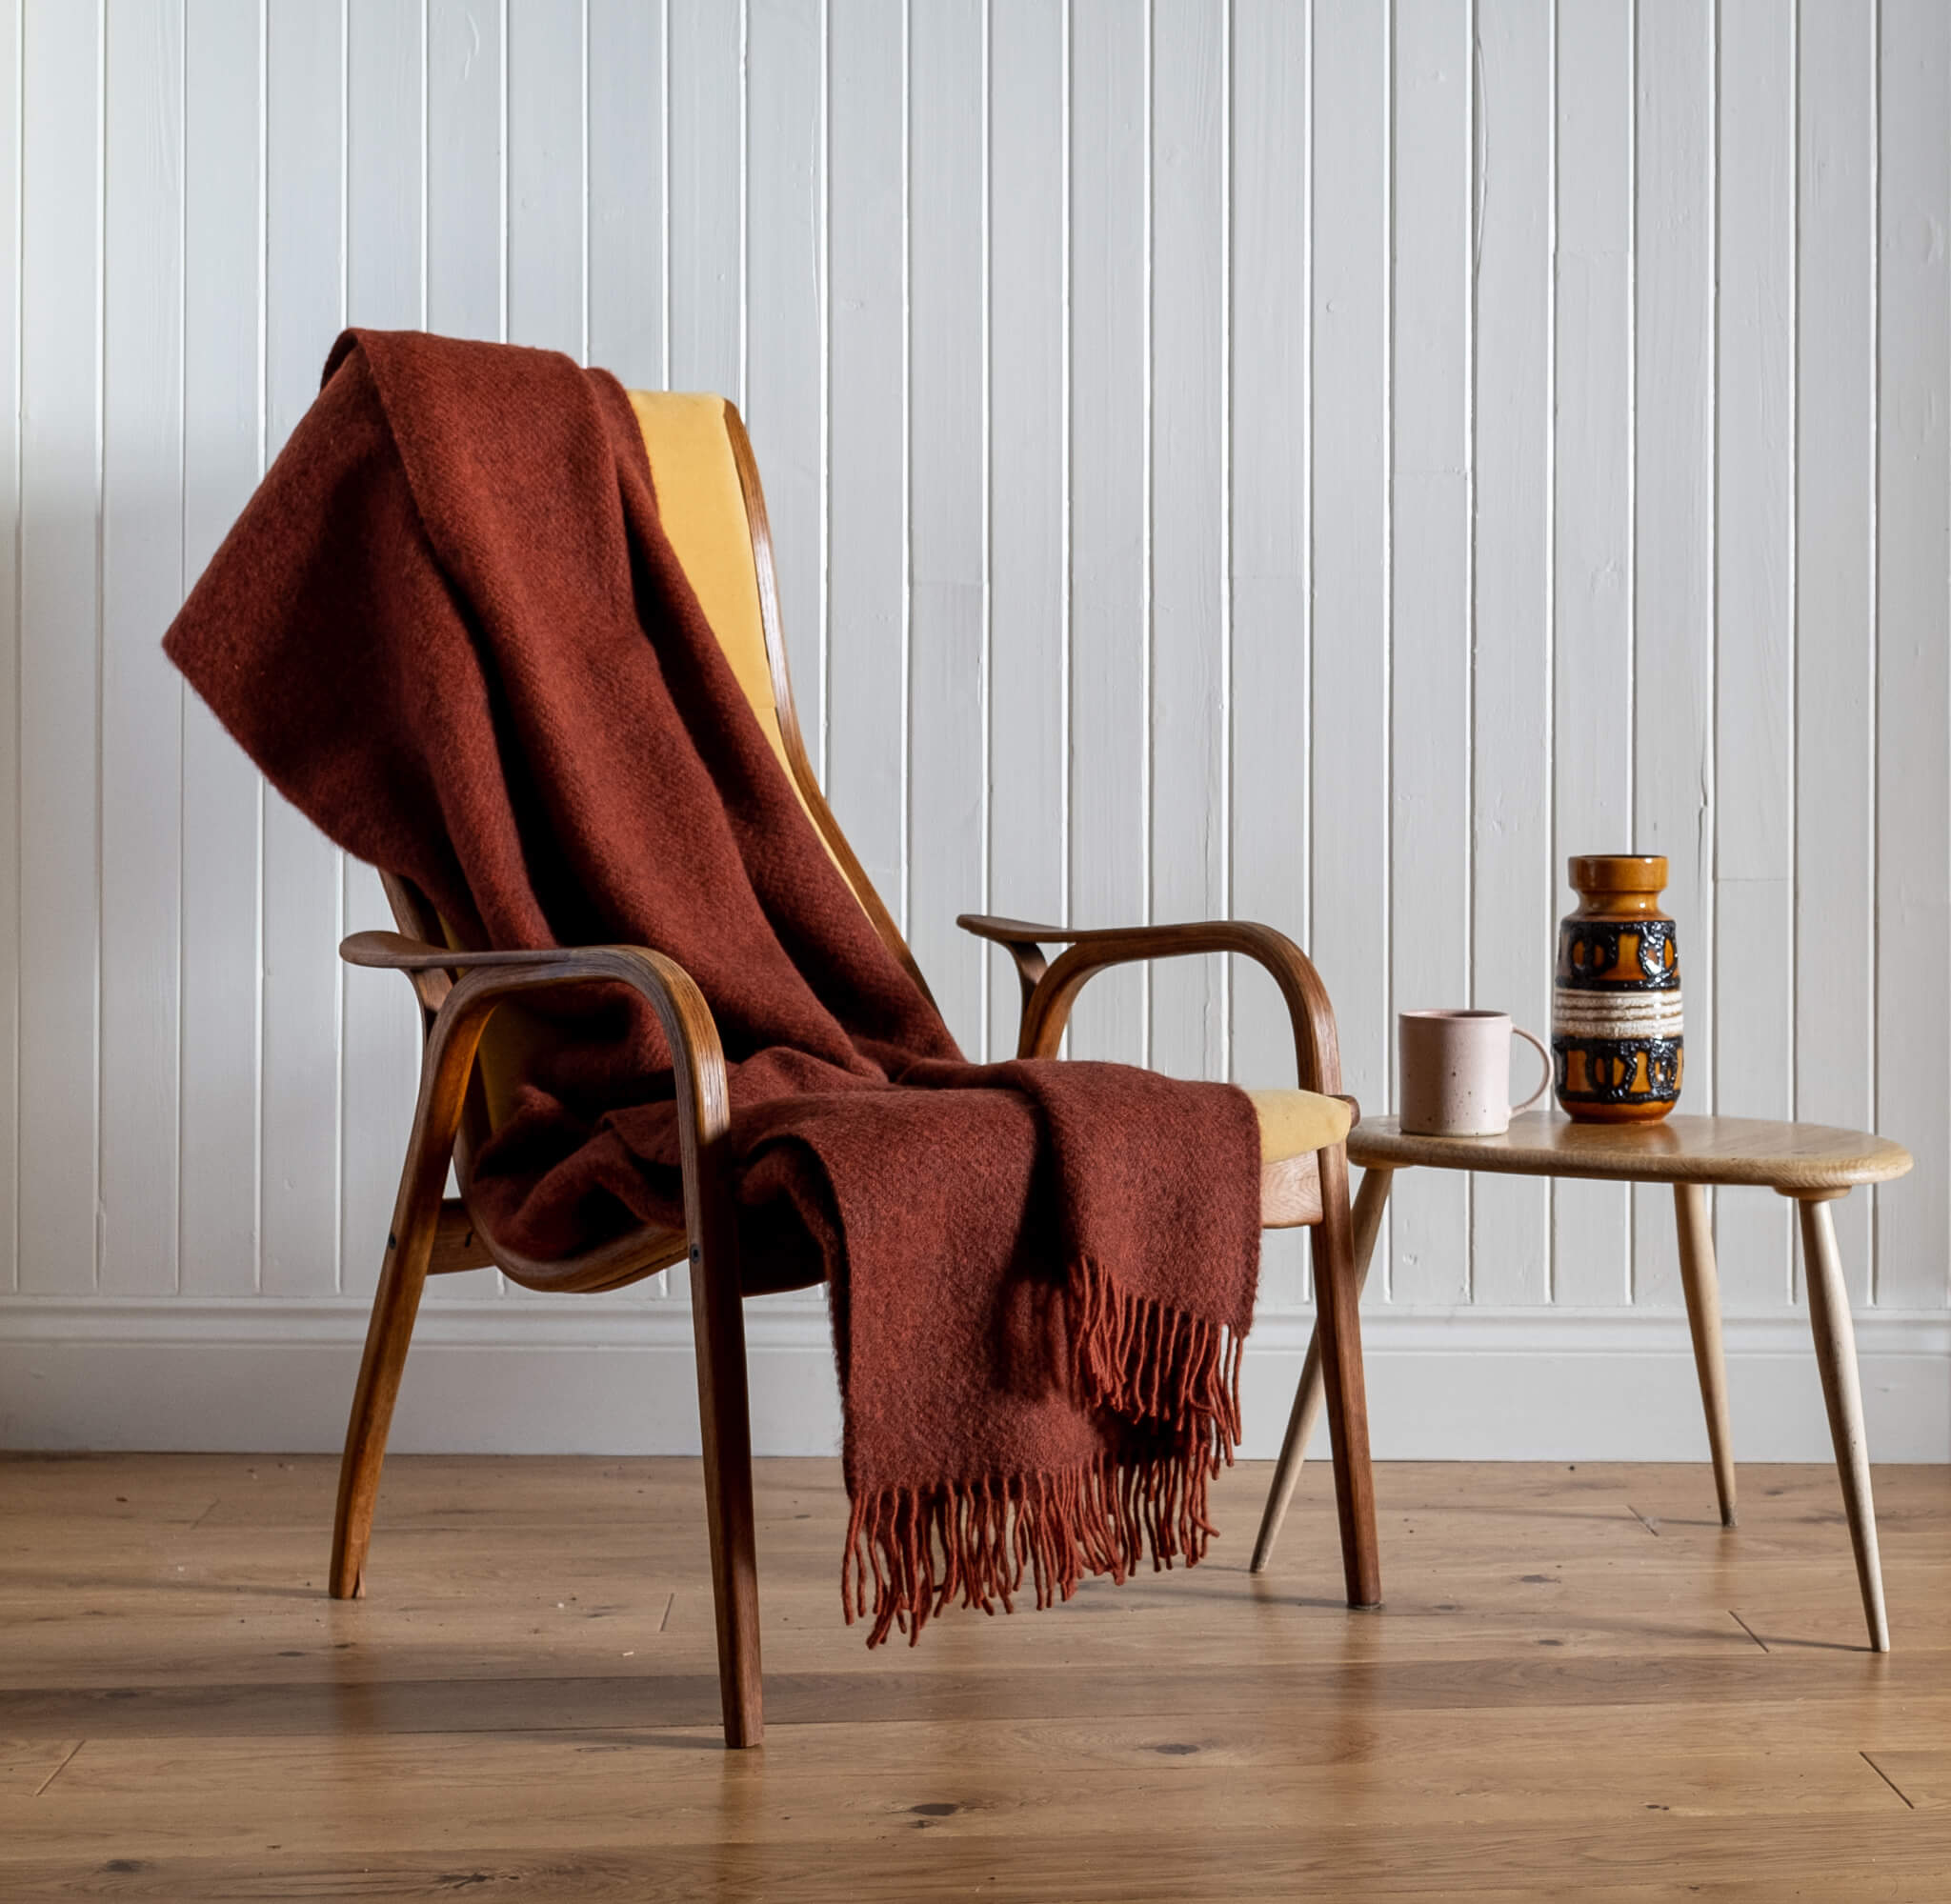 Gotland Wool Blanket – Rust, draped on a chair